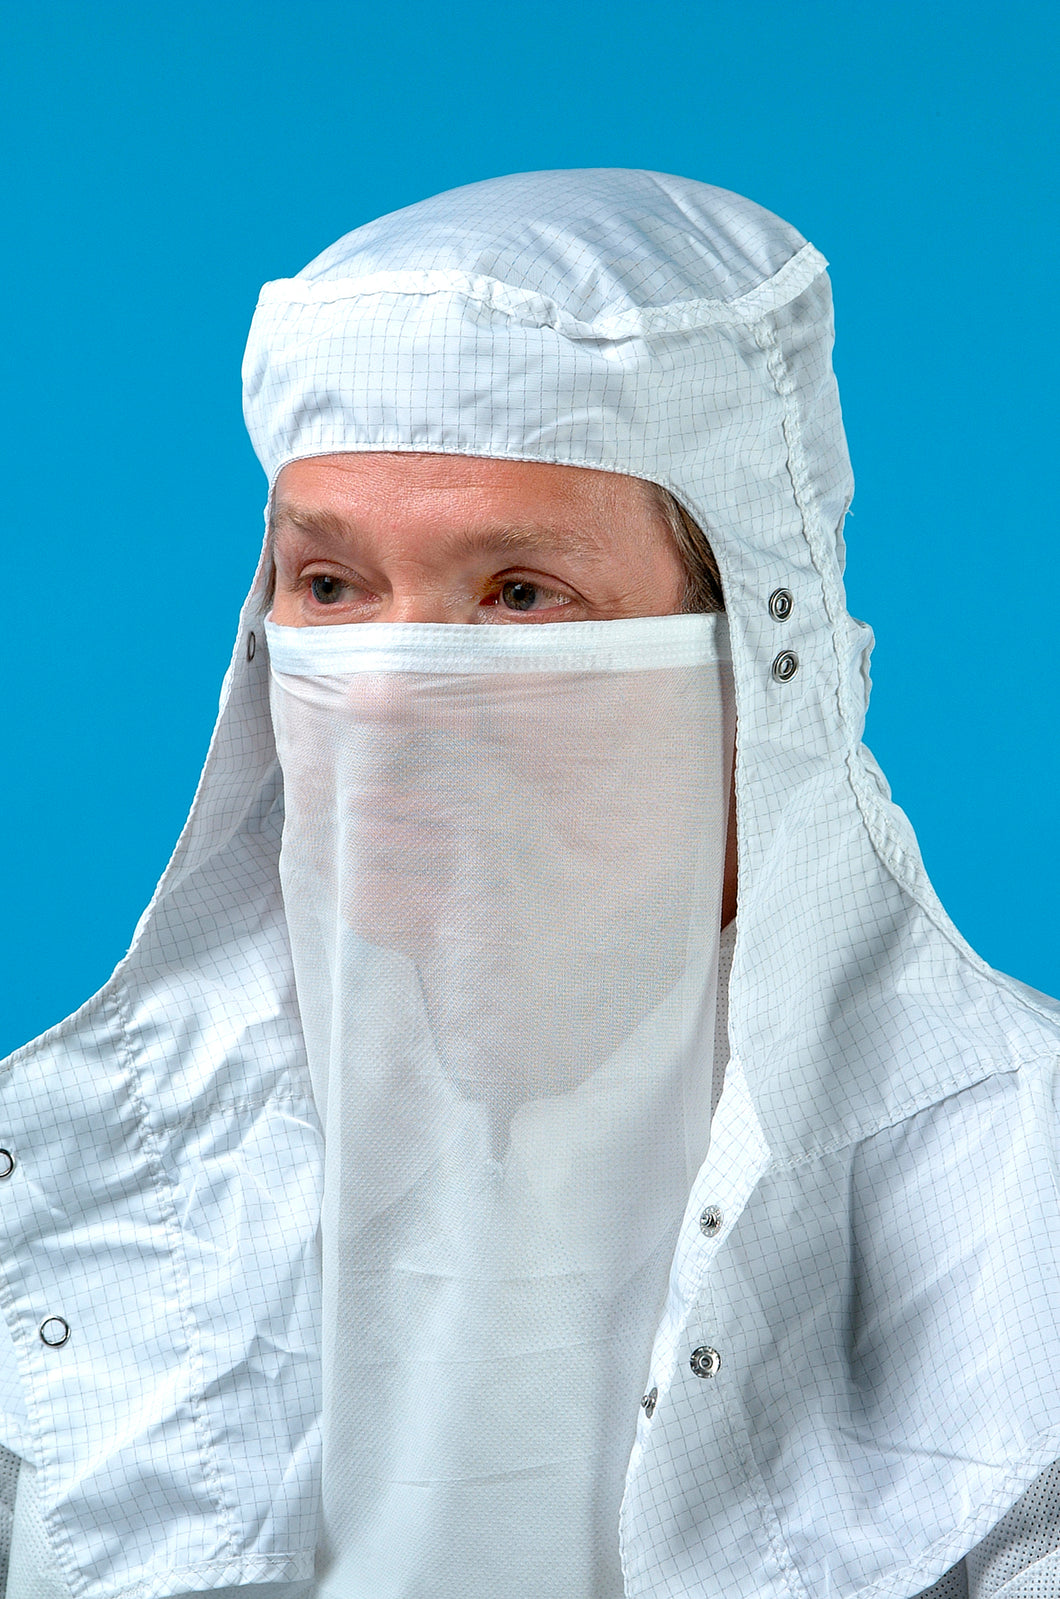 Spunlace Nonwoven Cellulose-Polyester Face Veil White 17 gsm 50 ea/Bag 3 Bags/Case